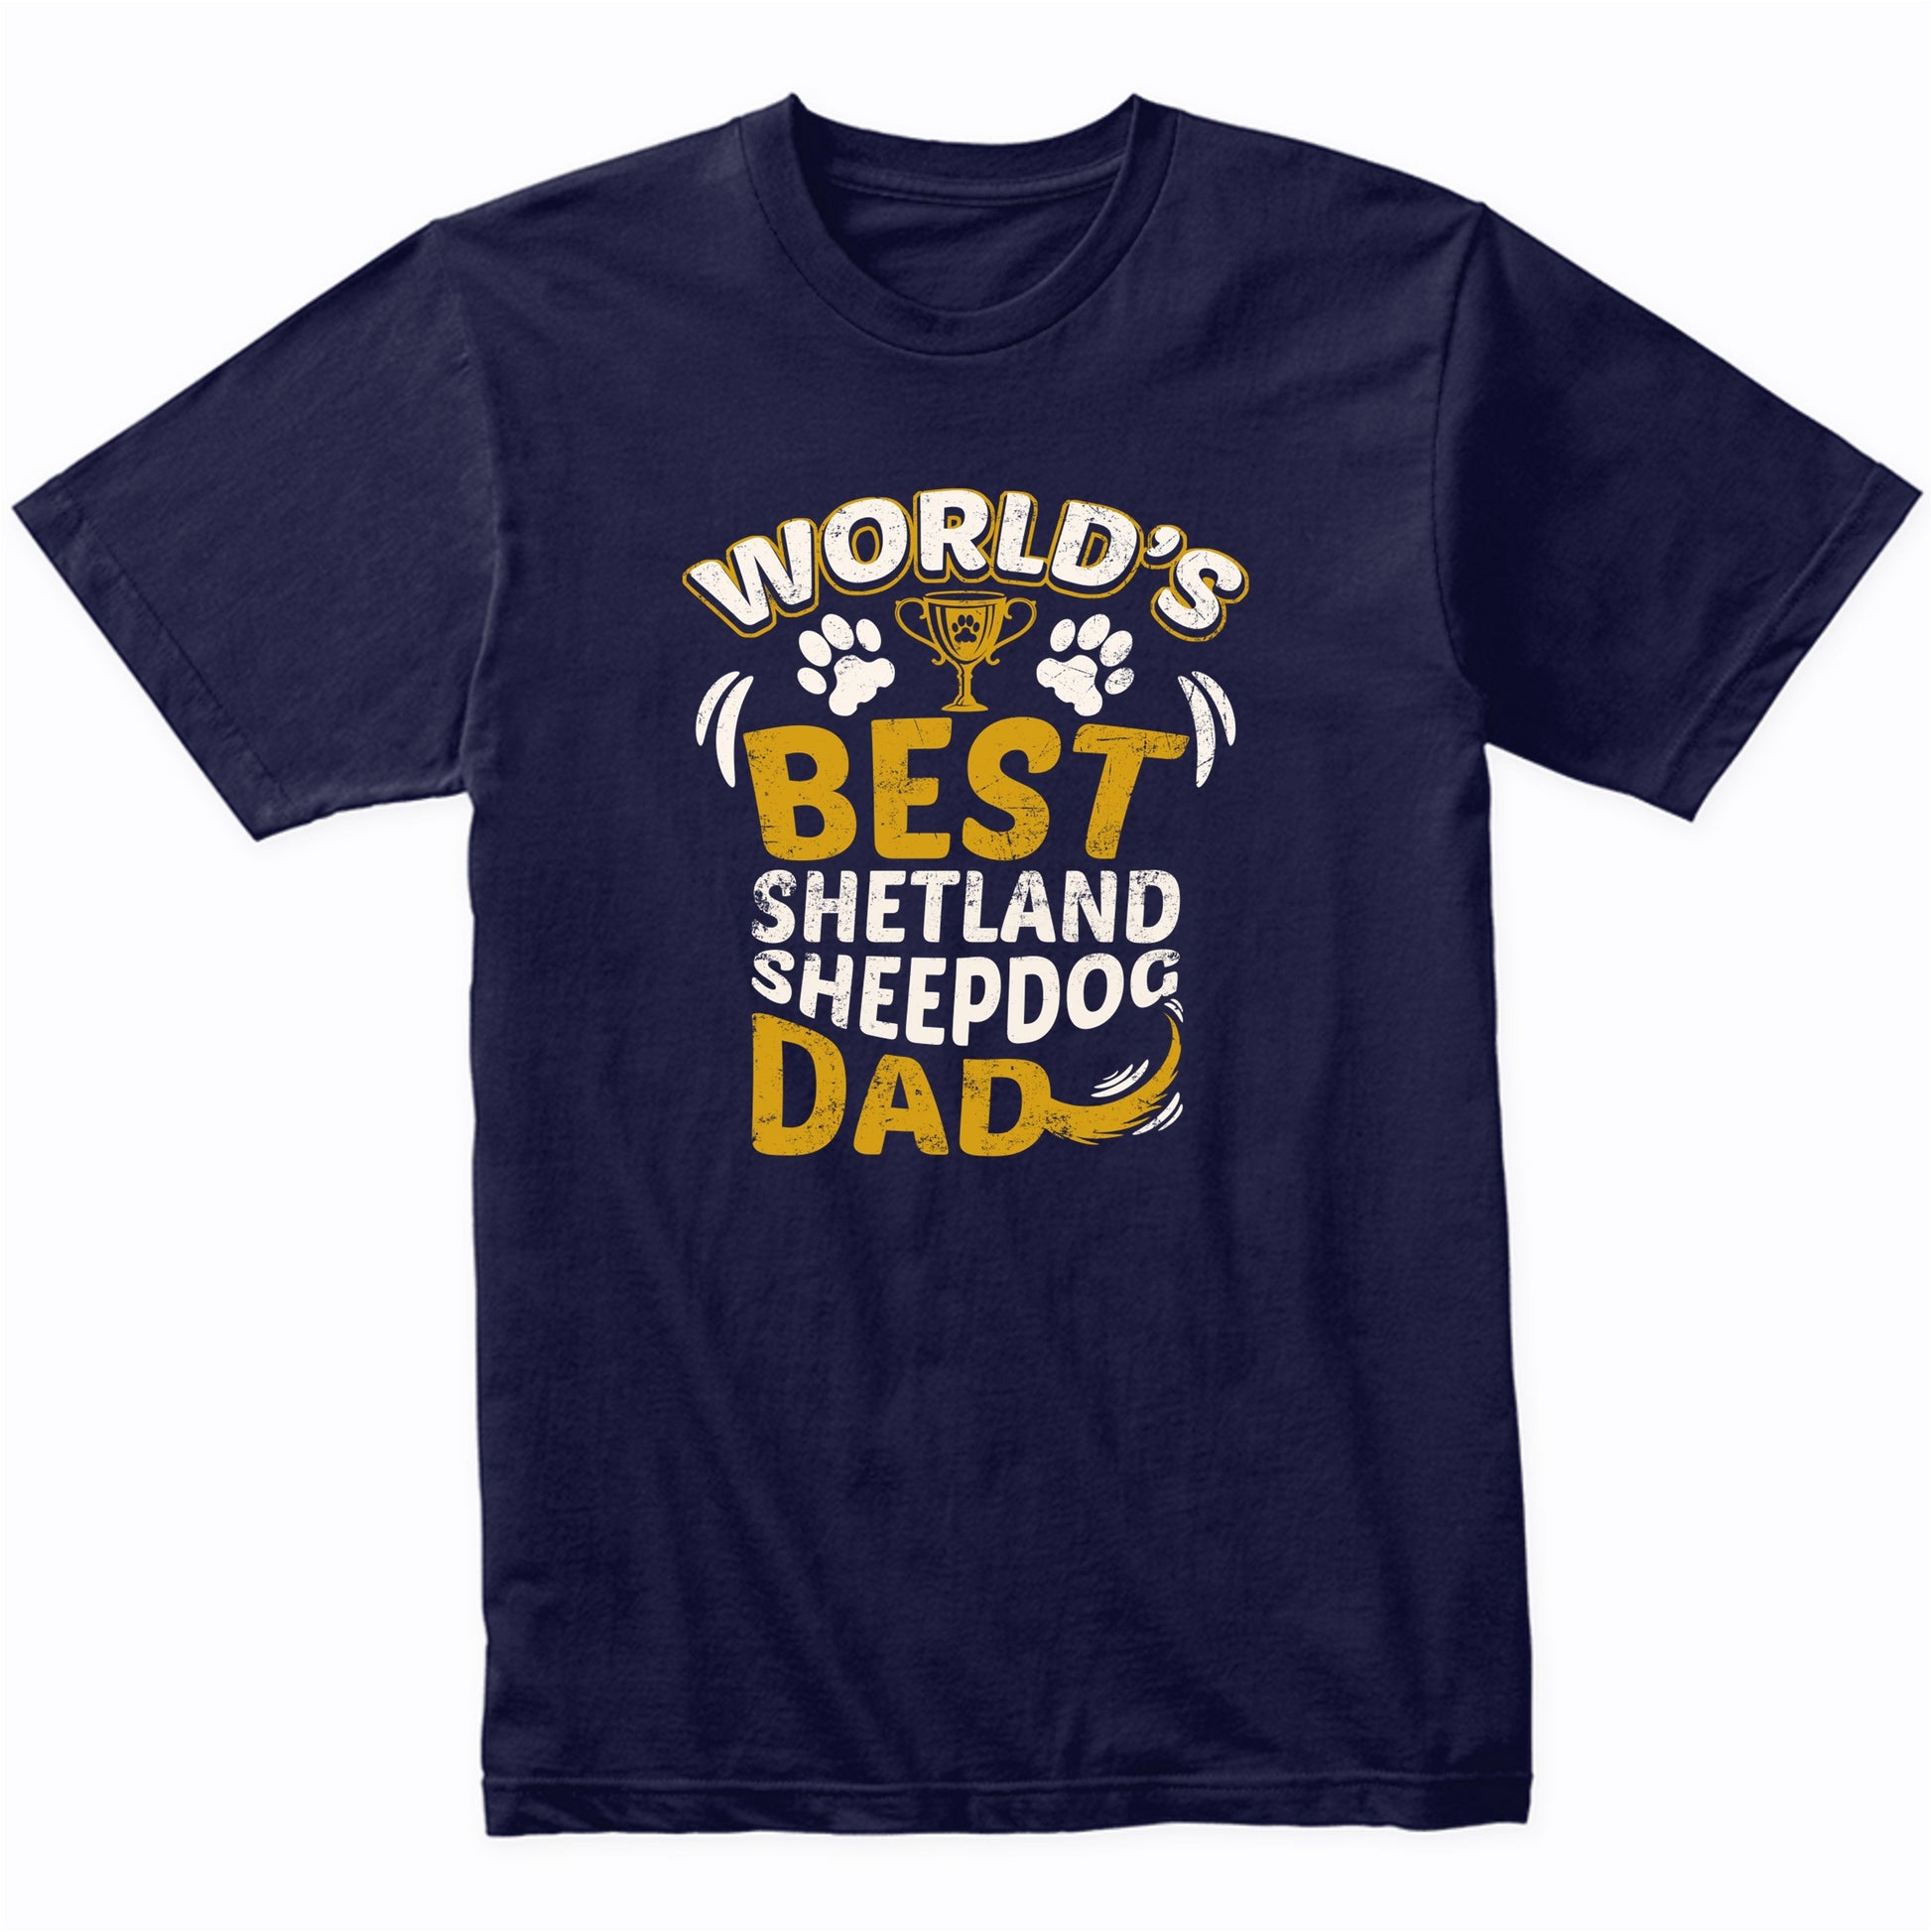 World's Best Shetland Sheepdog Dad Graphic T-Shirt